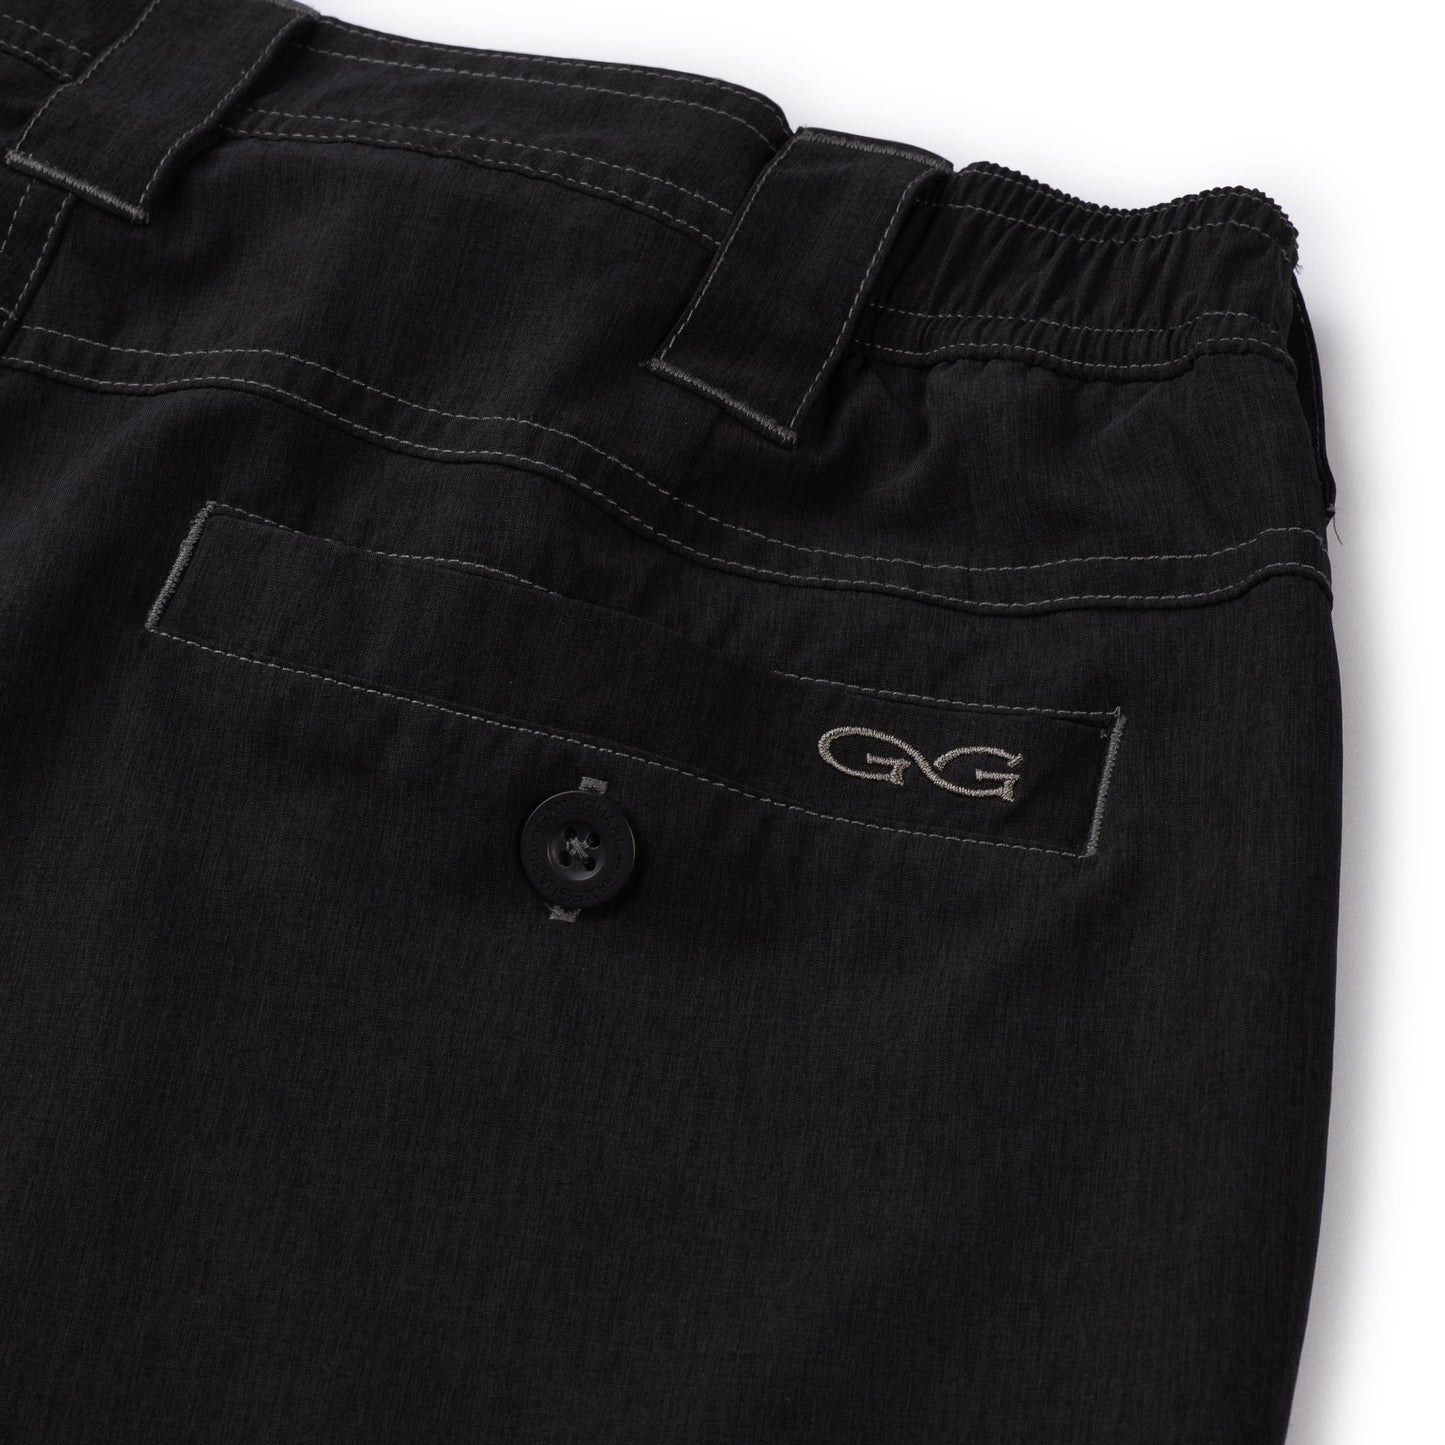 GameGuard Men's Charcoal Shorts